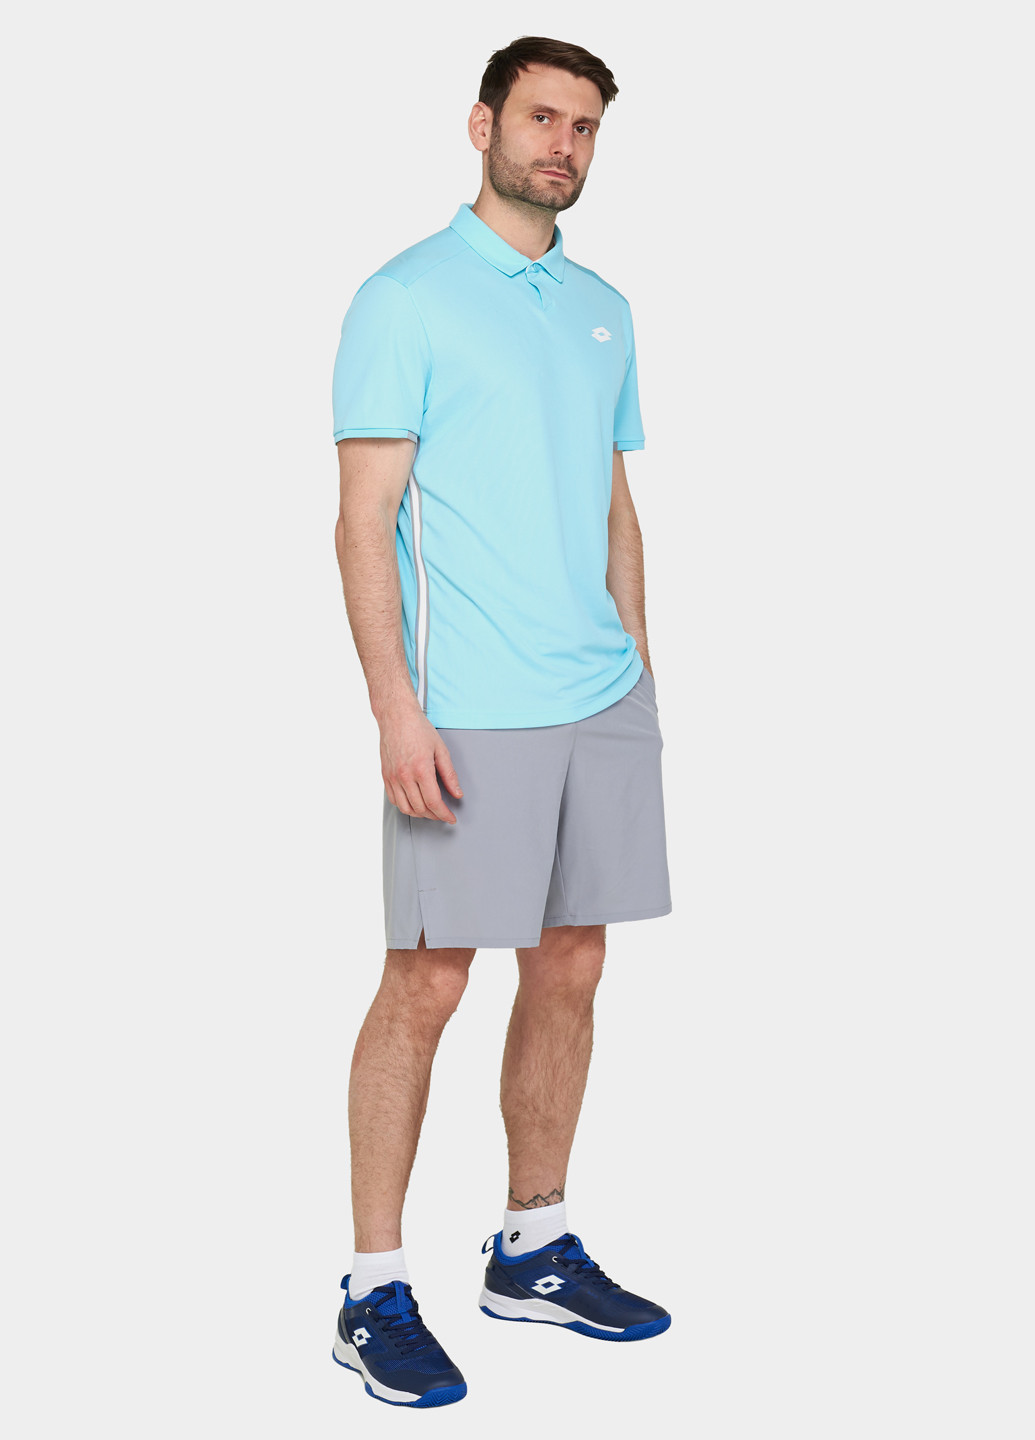 Голубой футболка-поло для мужчин Lotto с логотипом